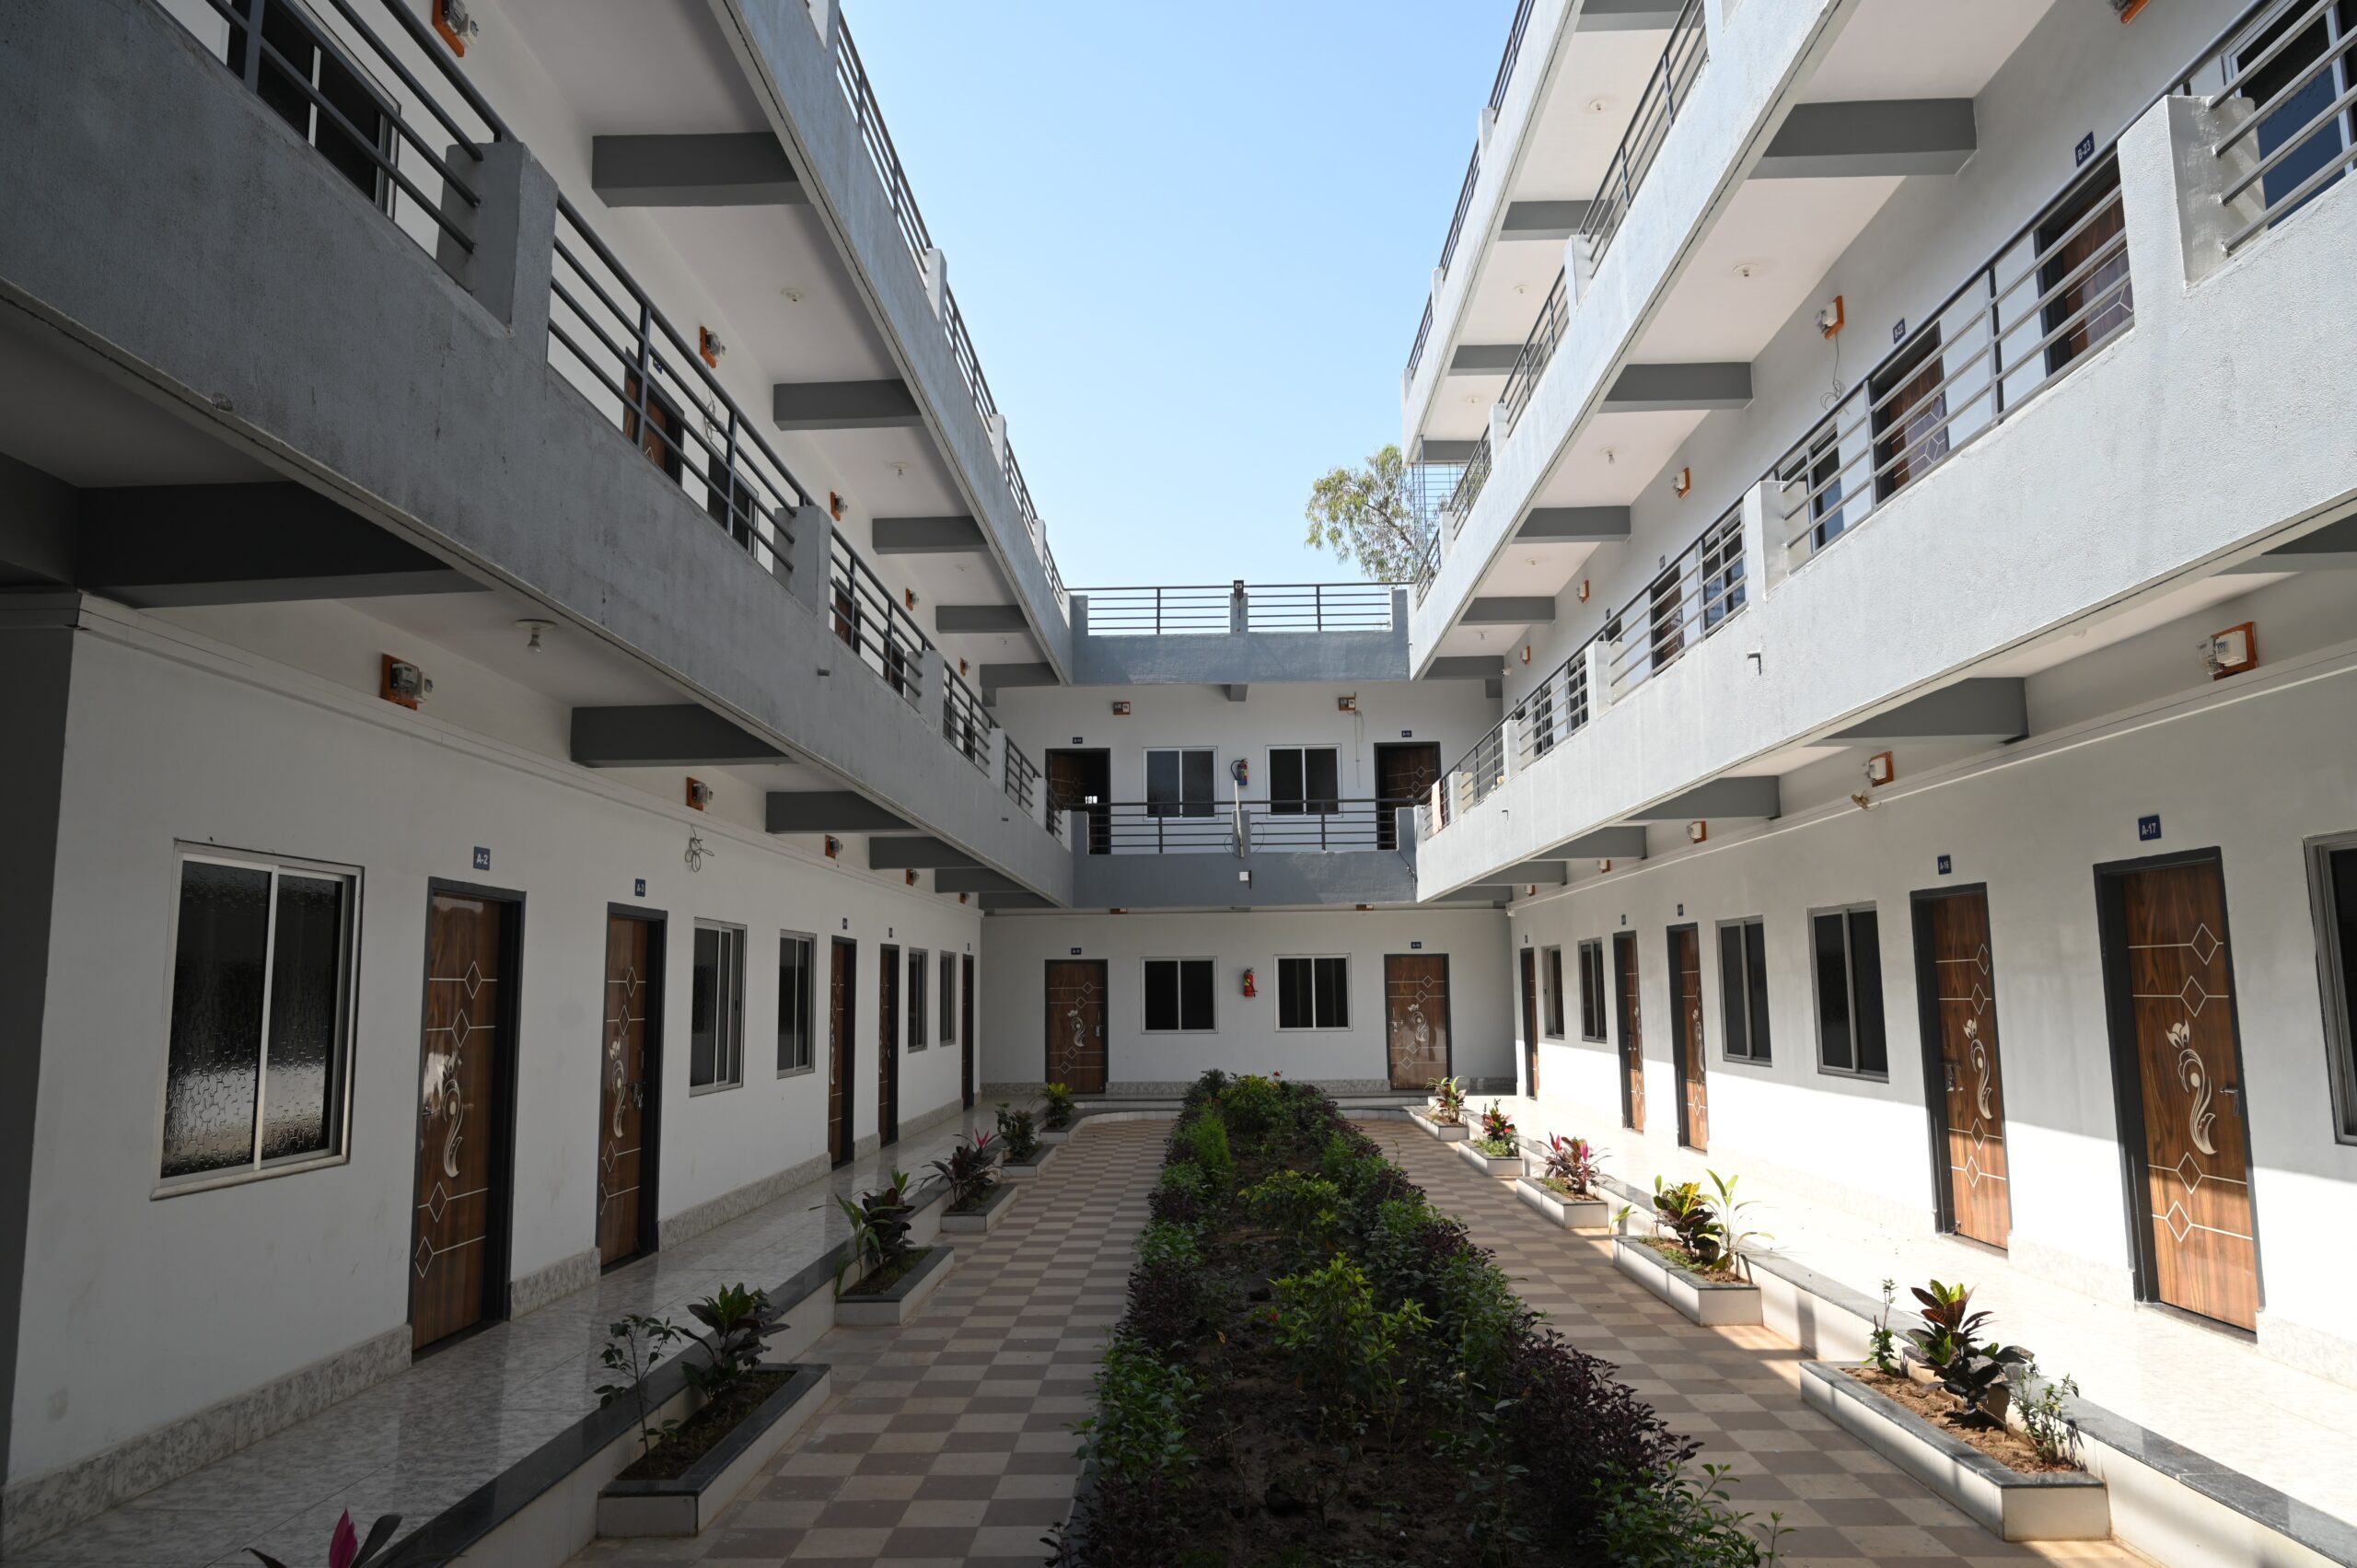 Darshan Hostel Building